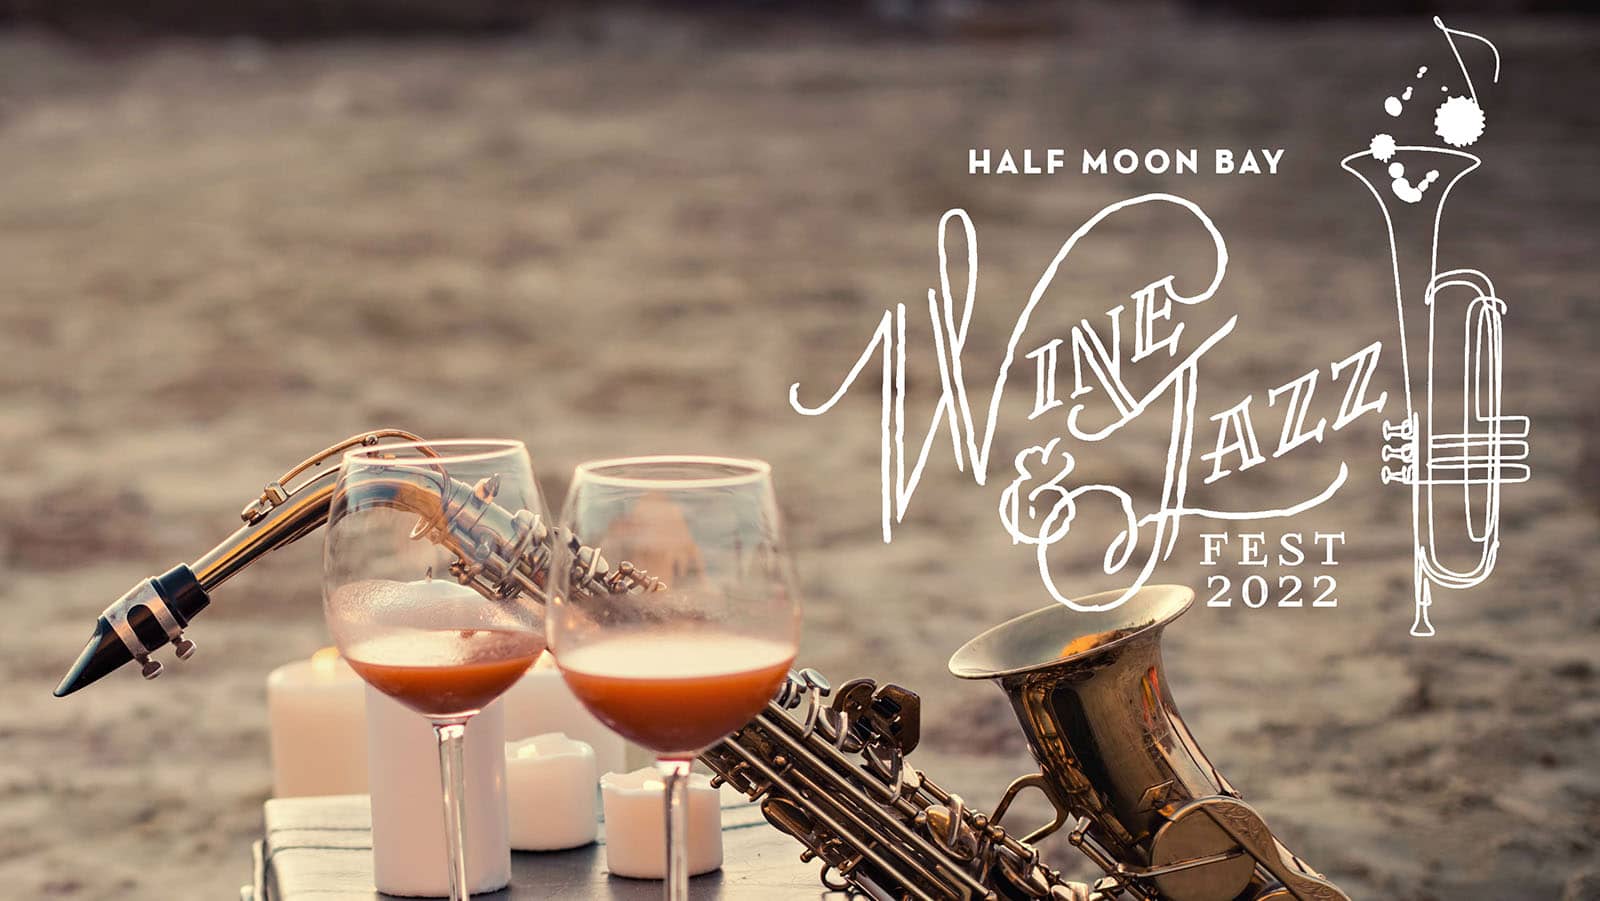 bay area, Half Moon Bay Wine and Jazz Fest